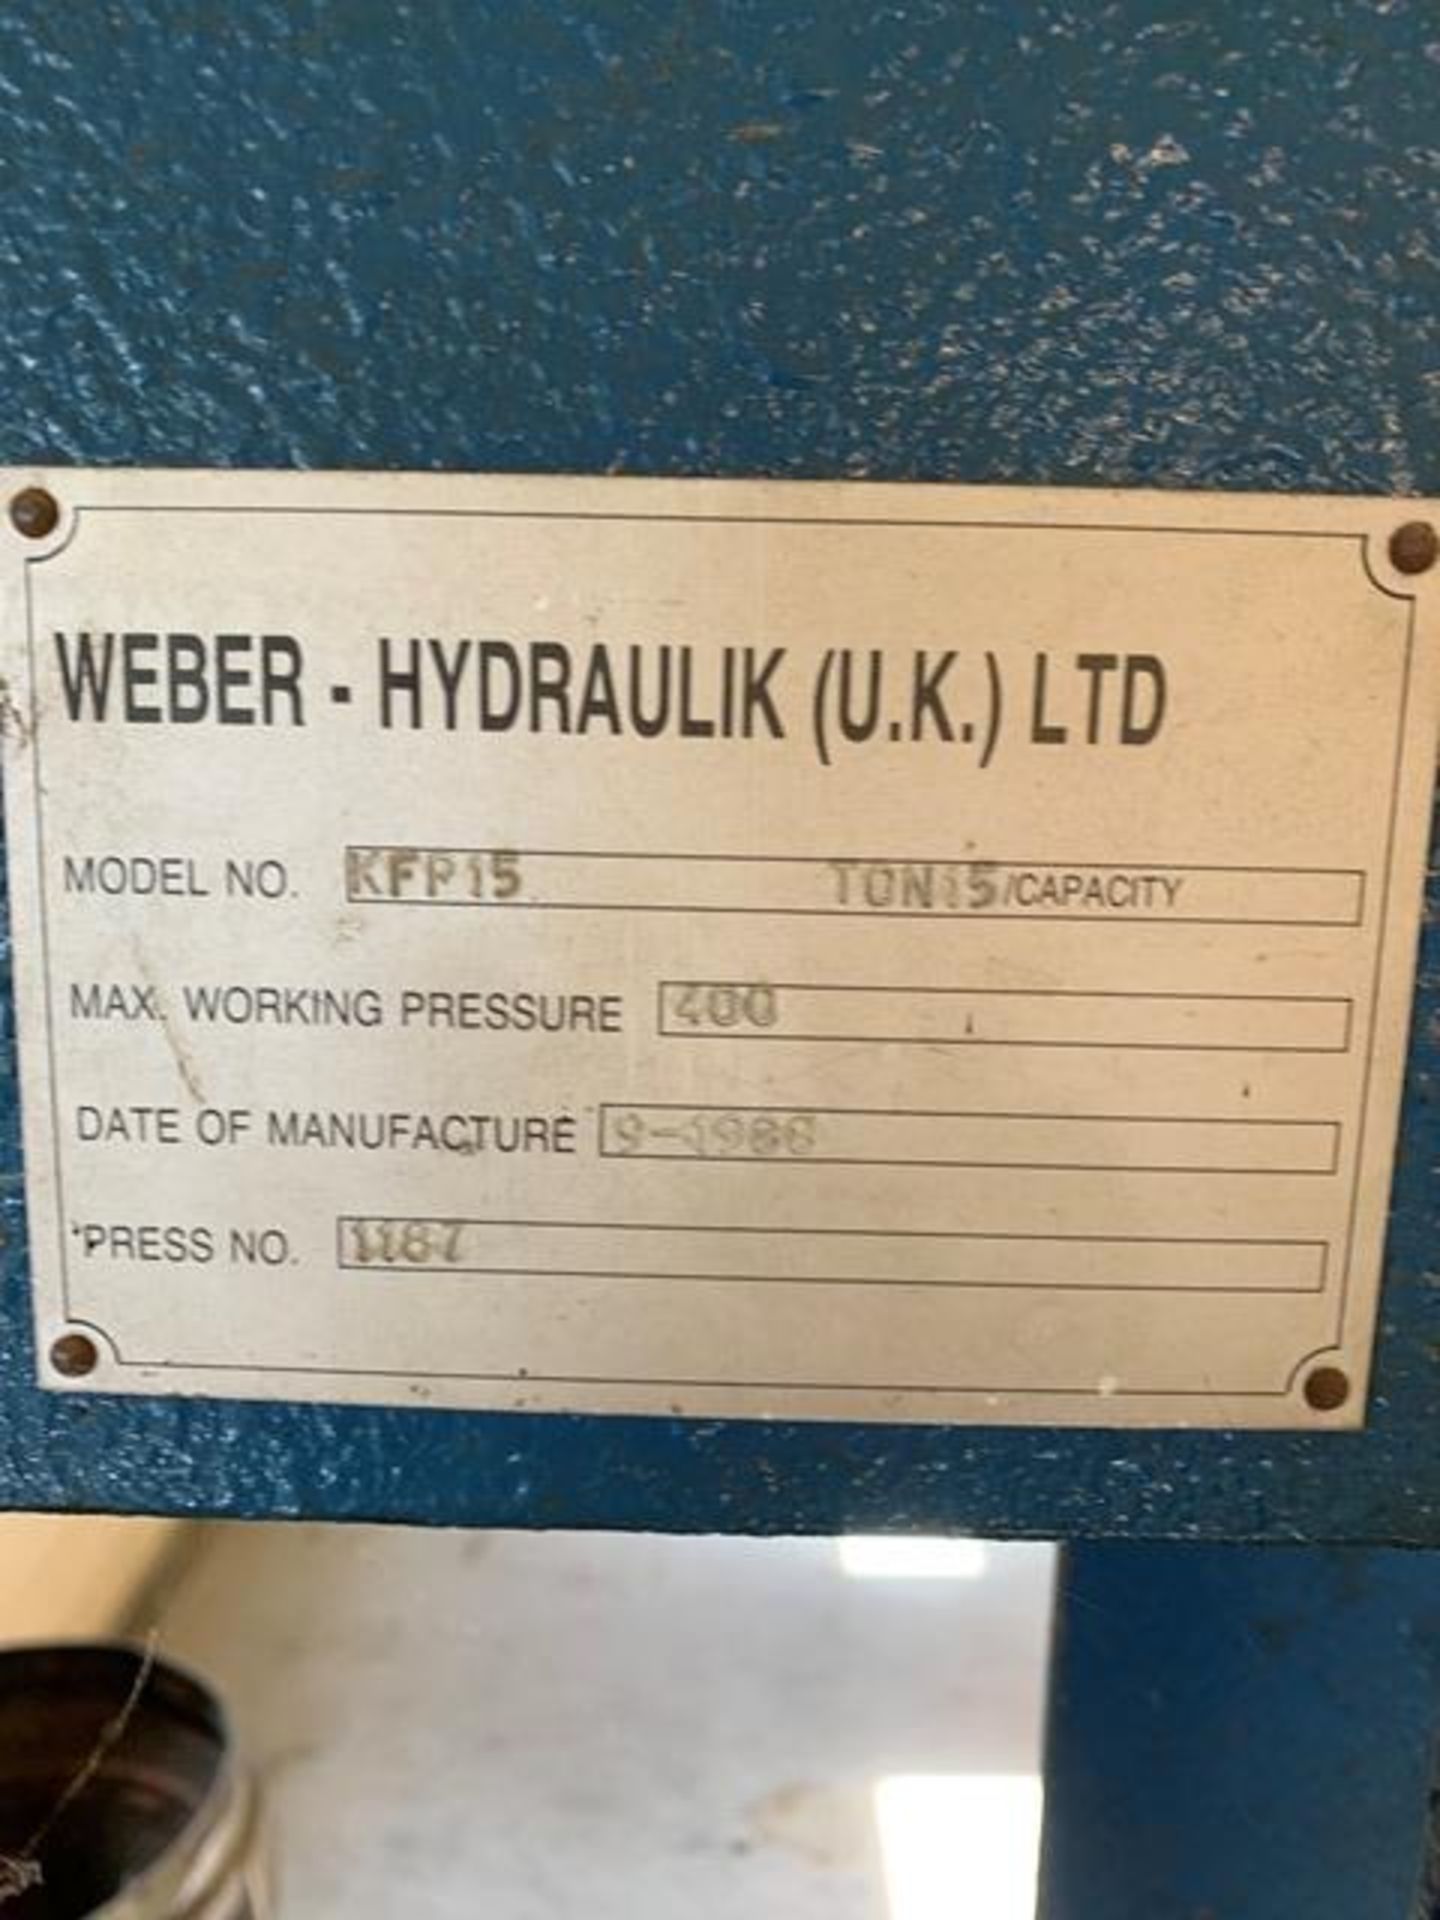 Weber Hydraulic man op Press KFP15 15TOn cap. Y.O.M 1988 Press H1187 - Image 2 of 3